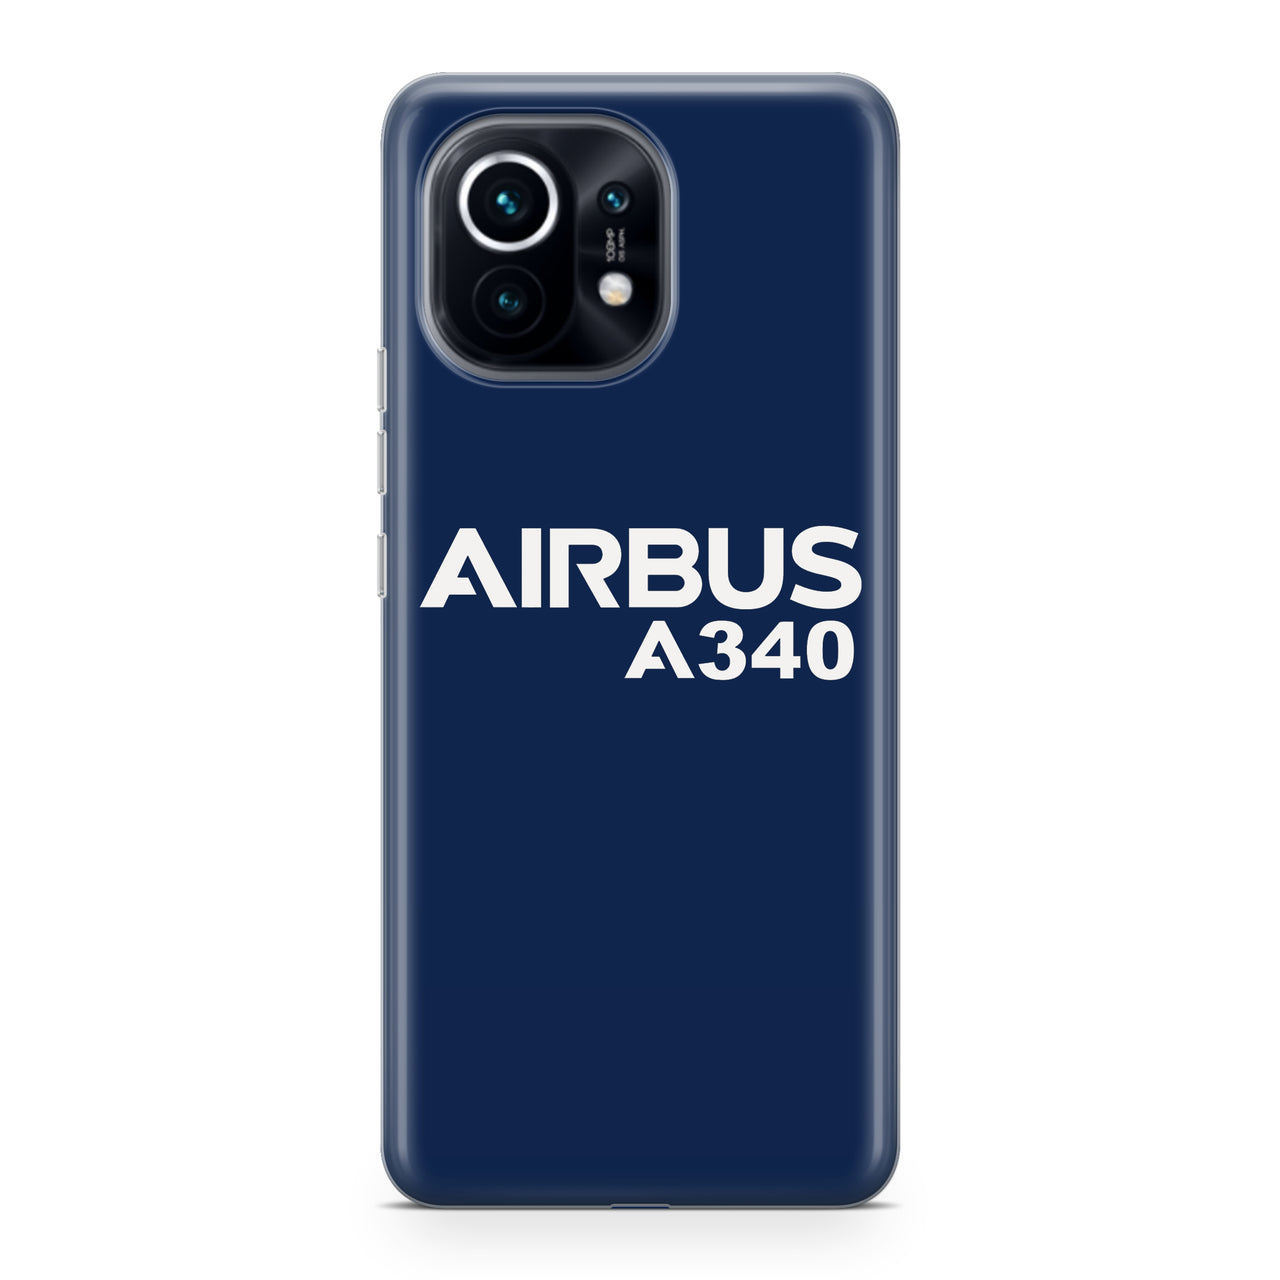 Airbus A340 & Text Designed Xiaomi Cases